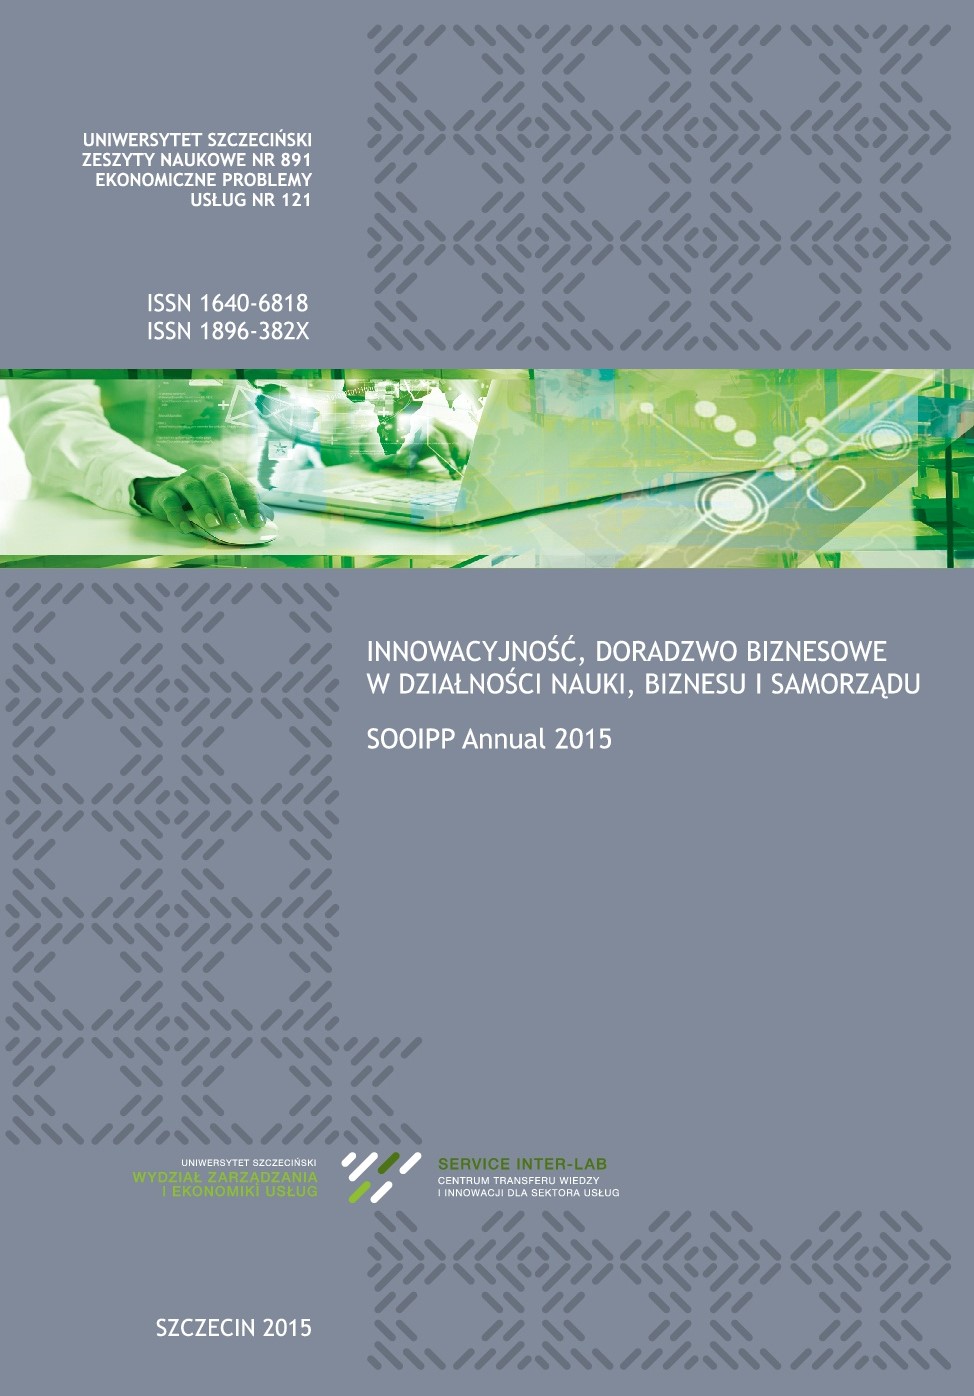 Krzysztof B. Matusiak – Research of Innovation and Entrepreneurship Cover Image